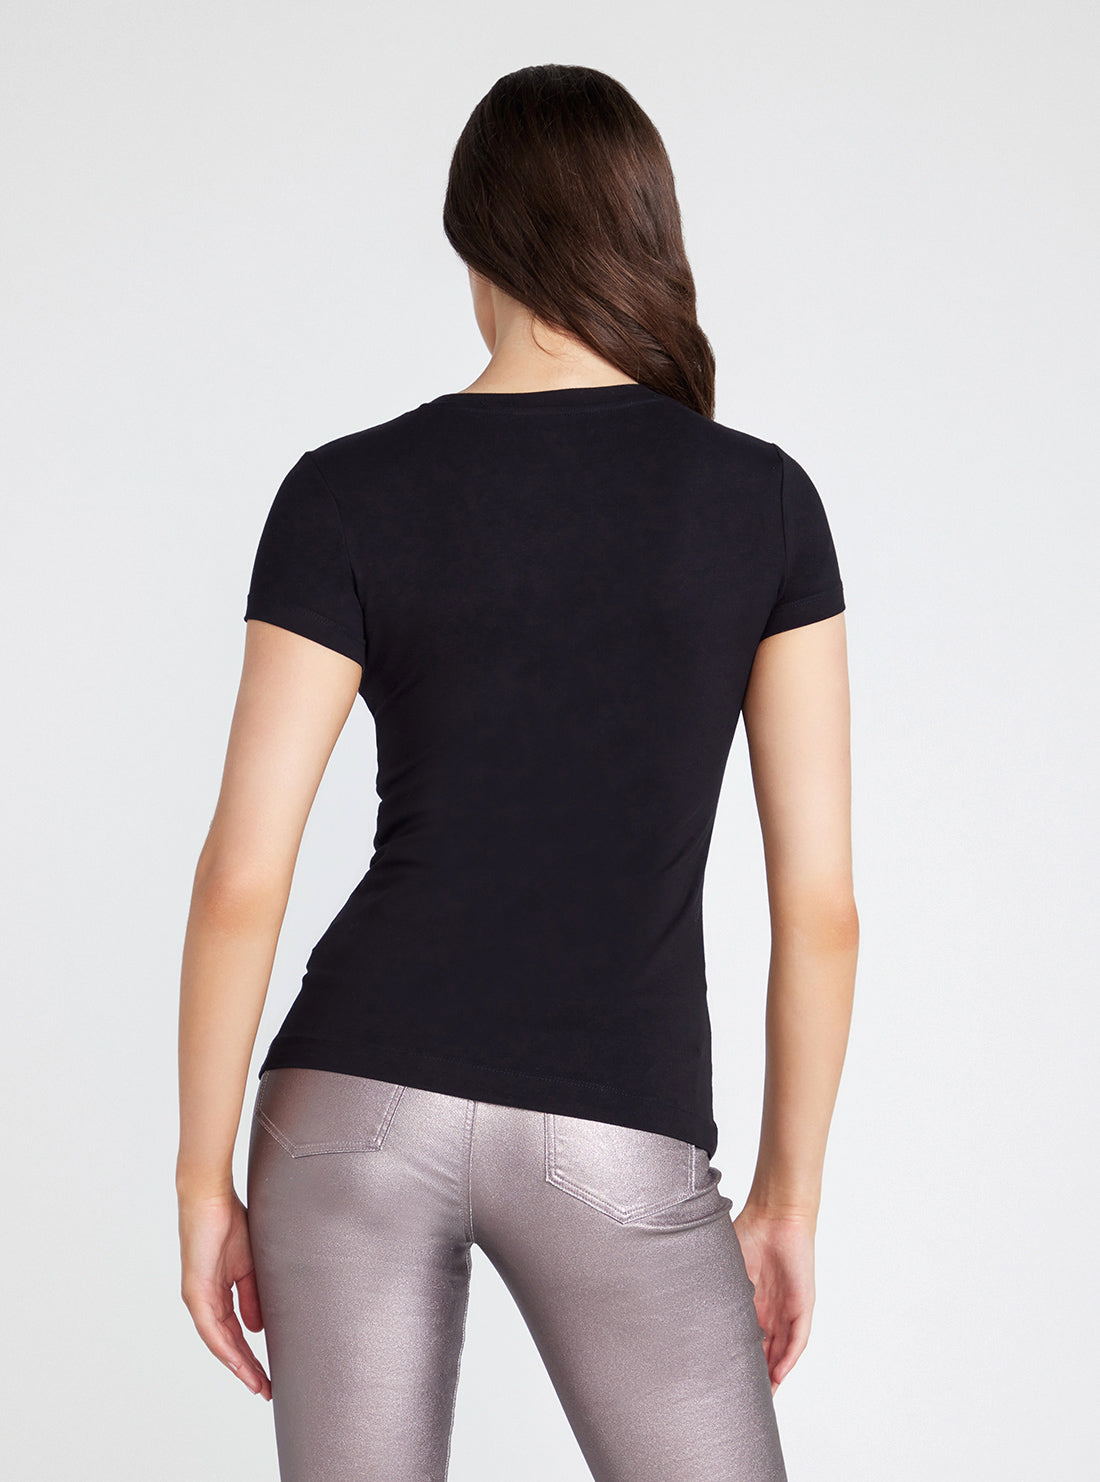 Black Rhinestone Rose T-Shirt | GUESS Women's Apparel | back view